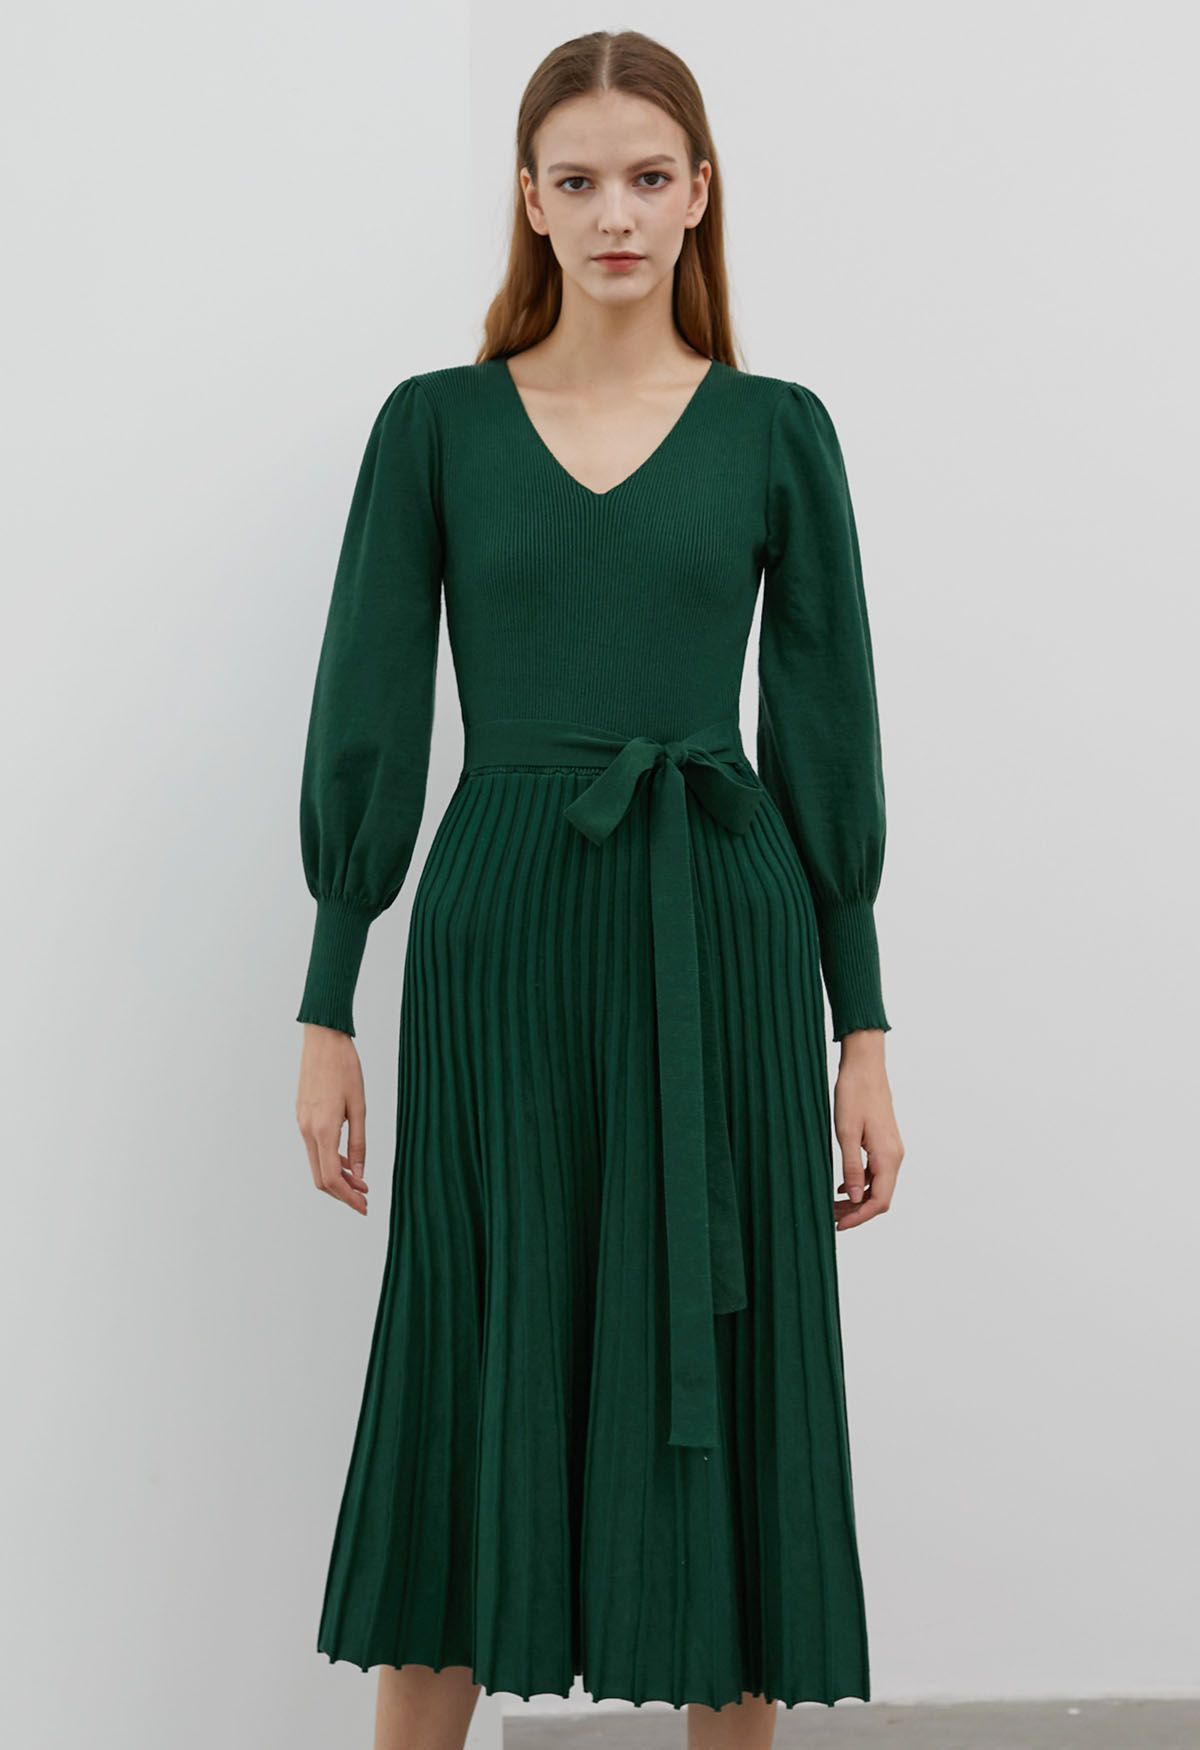 Captivating V-Neck Tie Waist Pleated Knit Dress in Dark Green | Chicwish